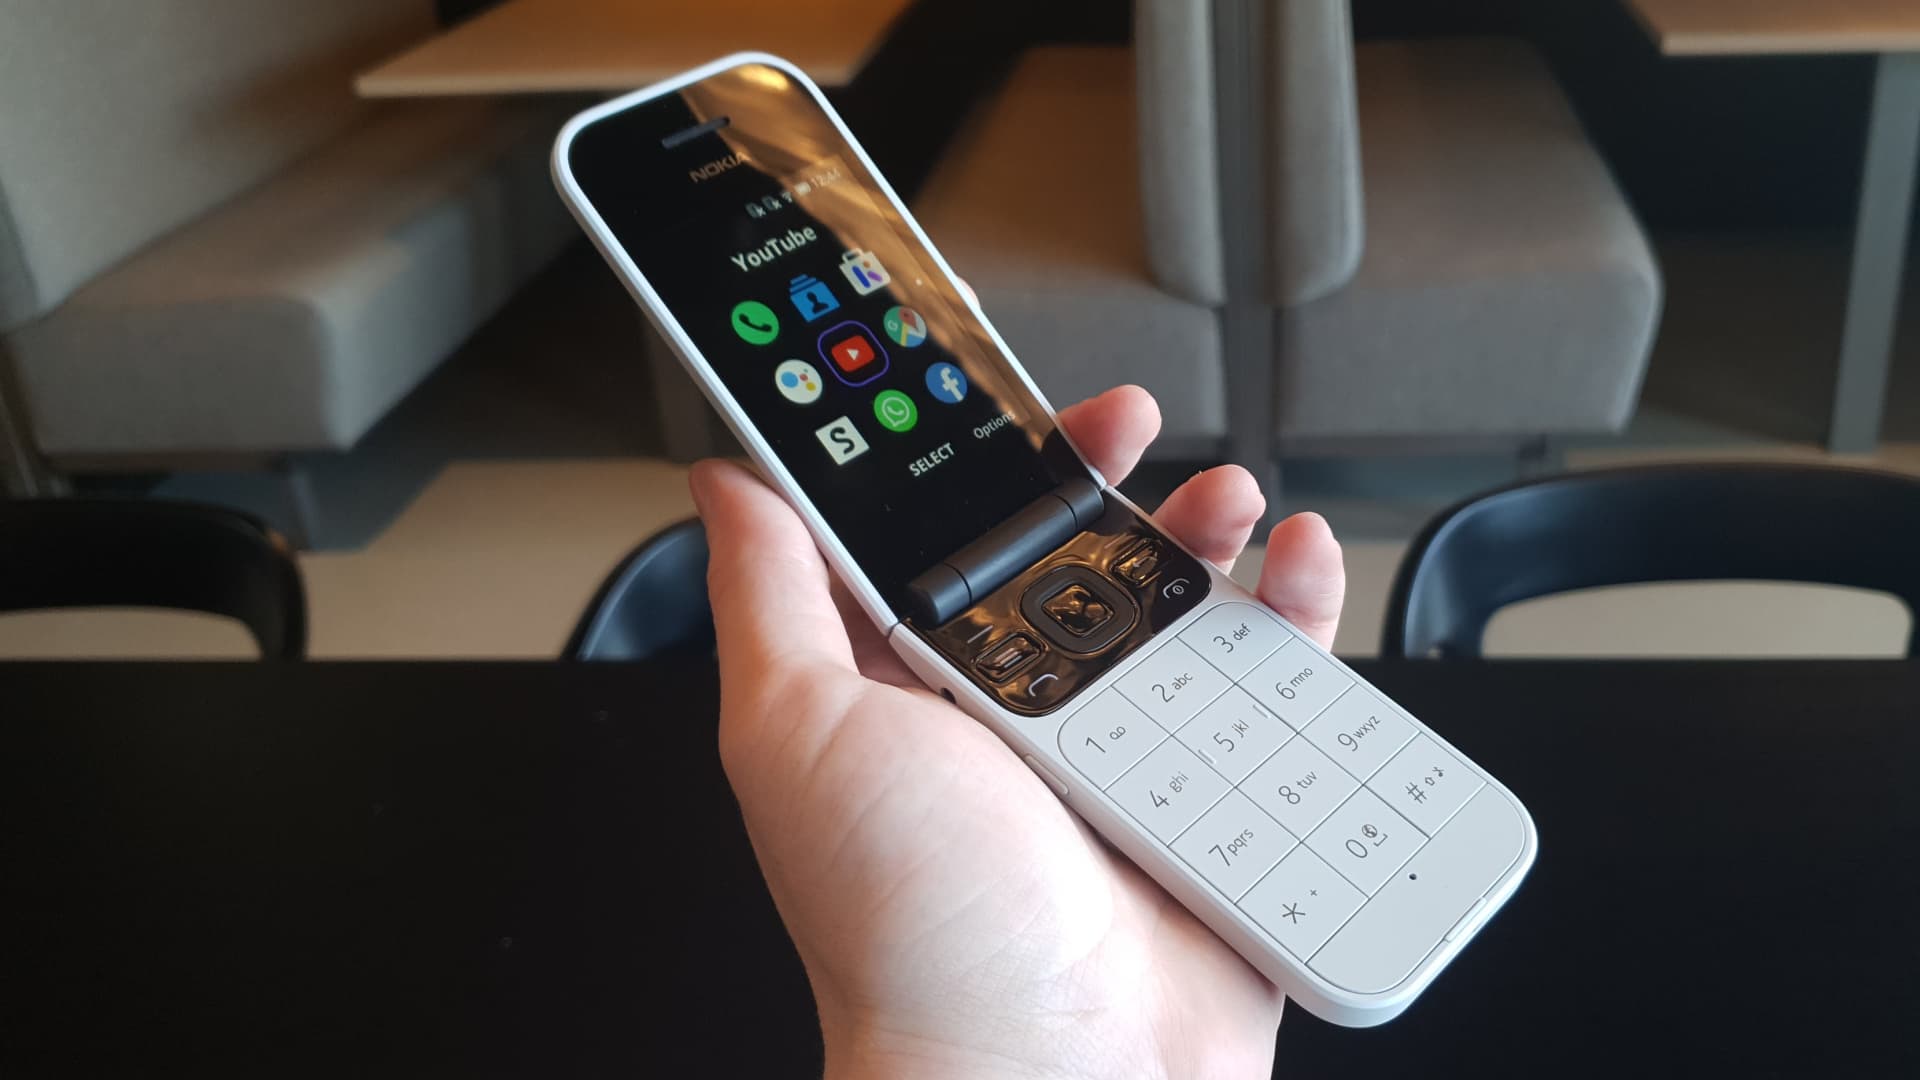 mavepine diameter buket Nokia 2720 Flip phone with 4G unveiled by HMD Global at IFA 2019